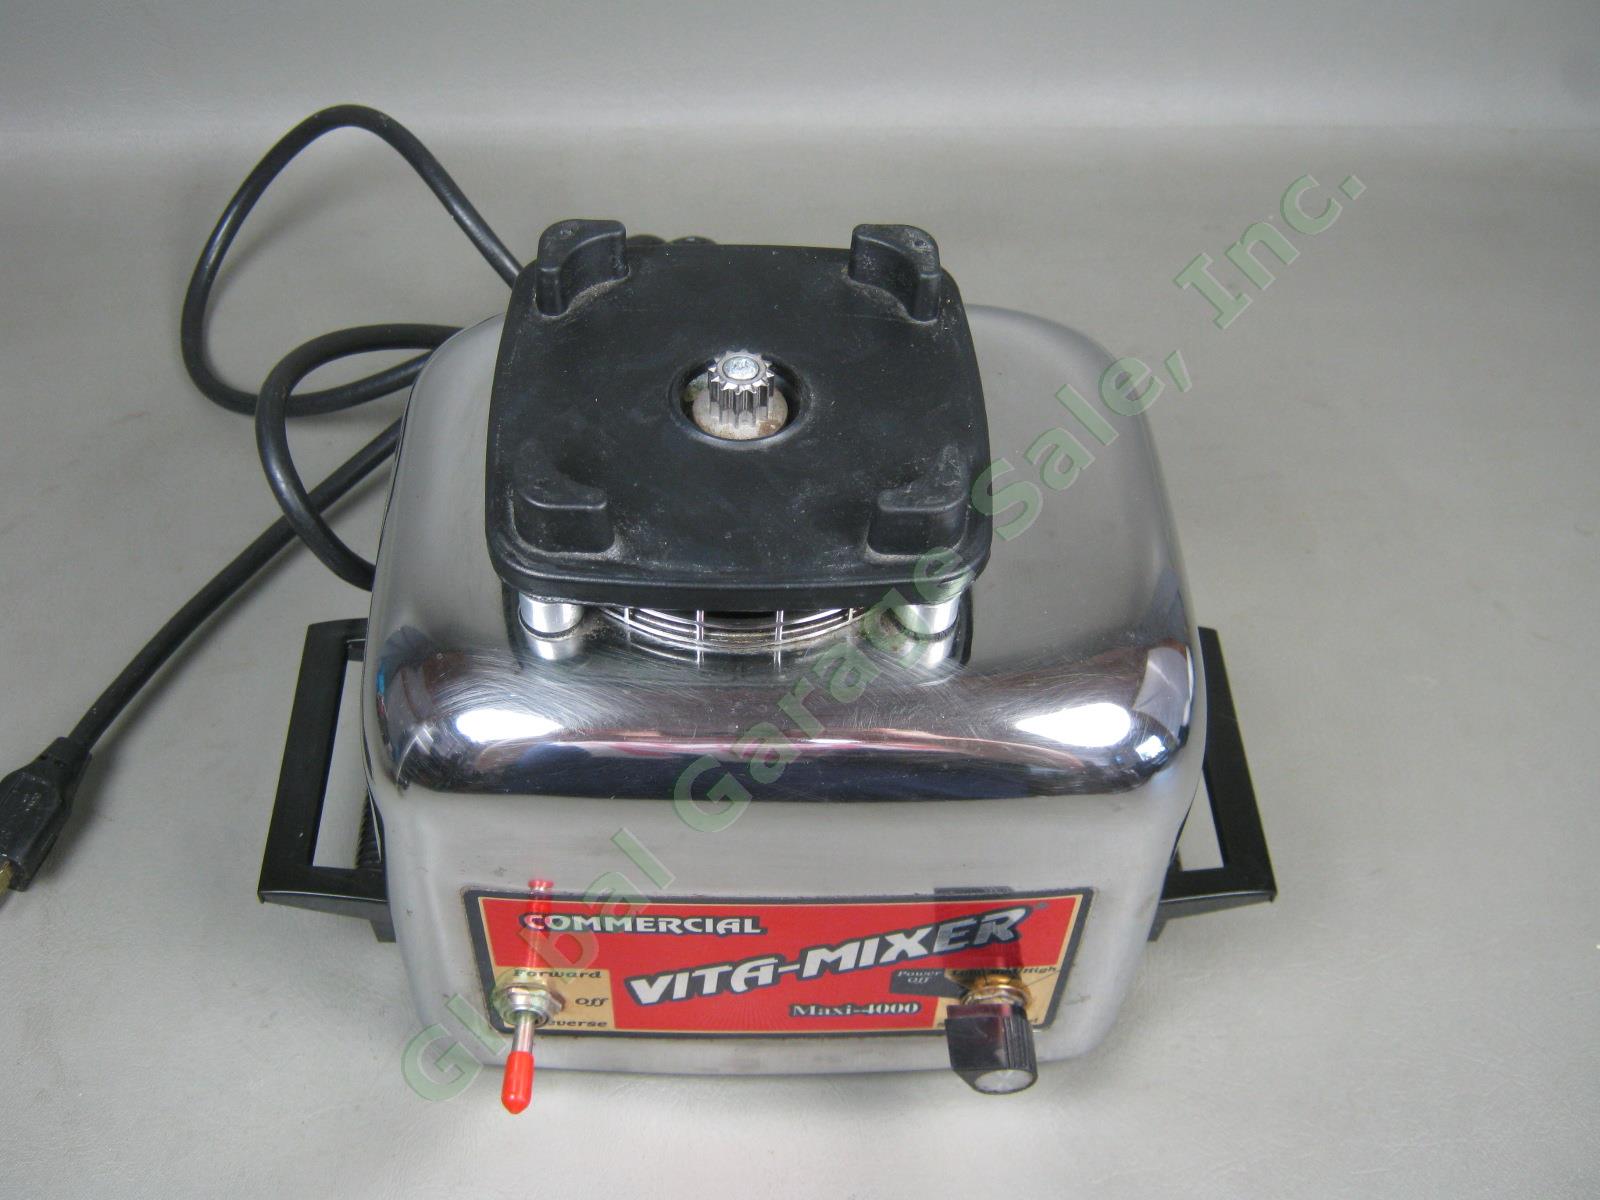 Vtg Vita-Mix Maxi-4000 Stainless Steel 3-Speed Commercial Mixer Blender Juicer 4